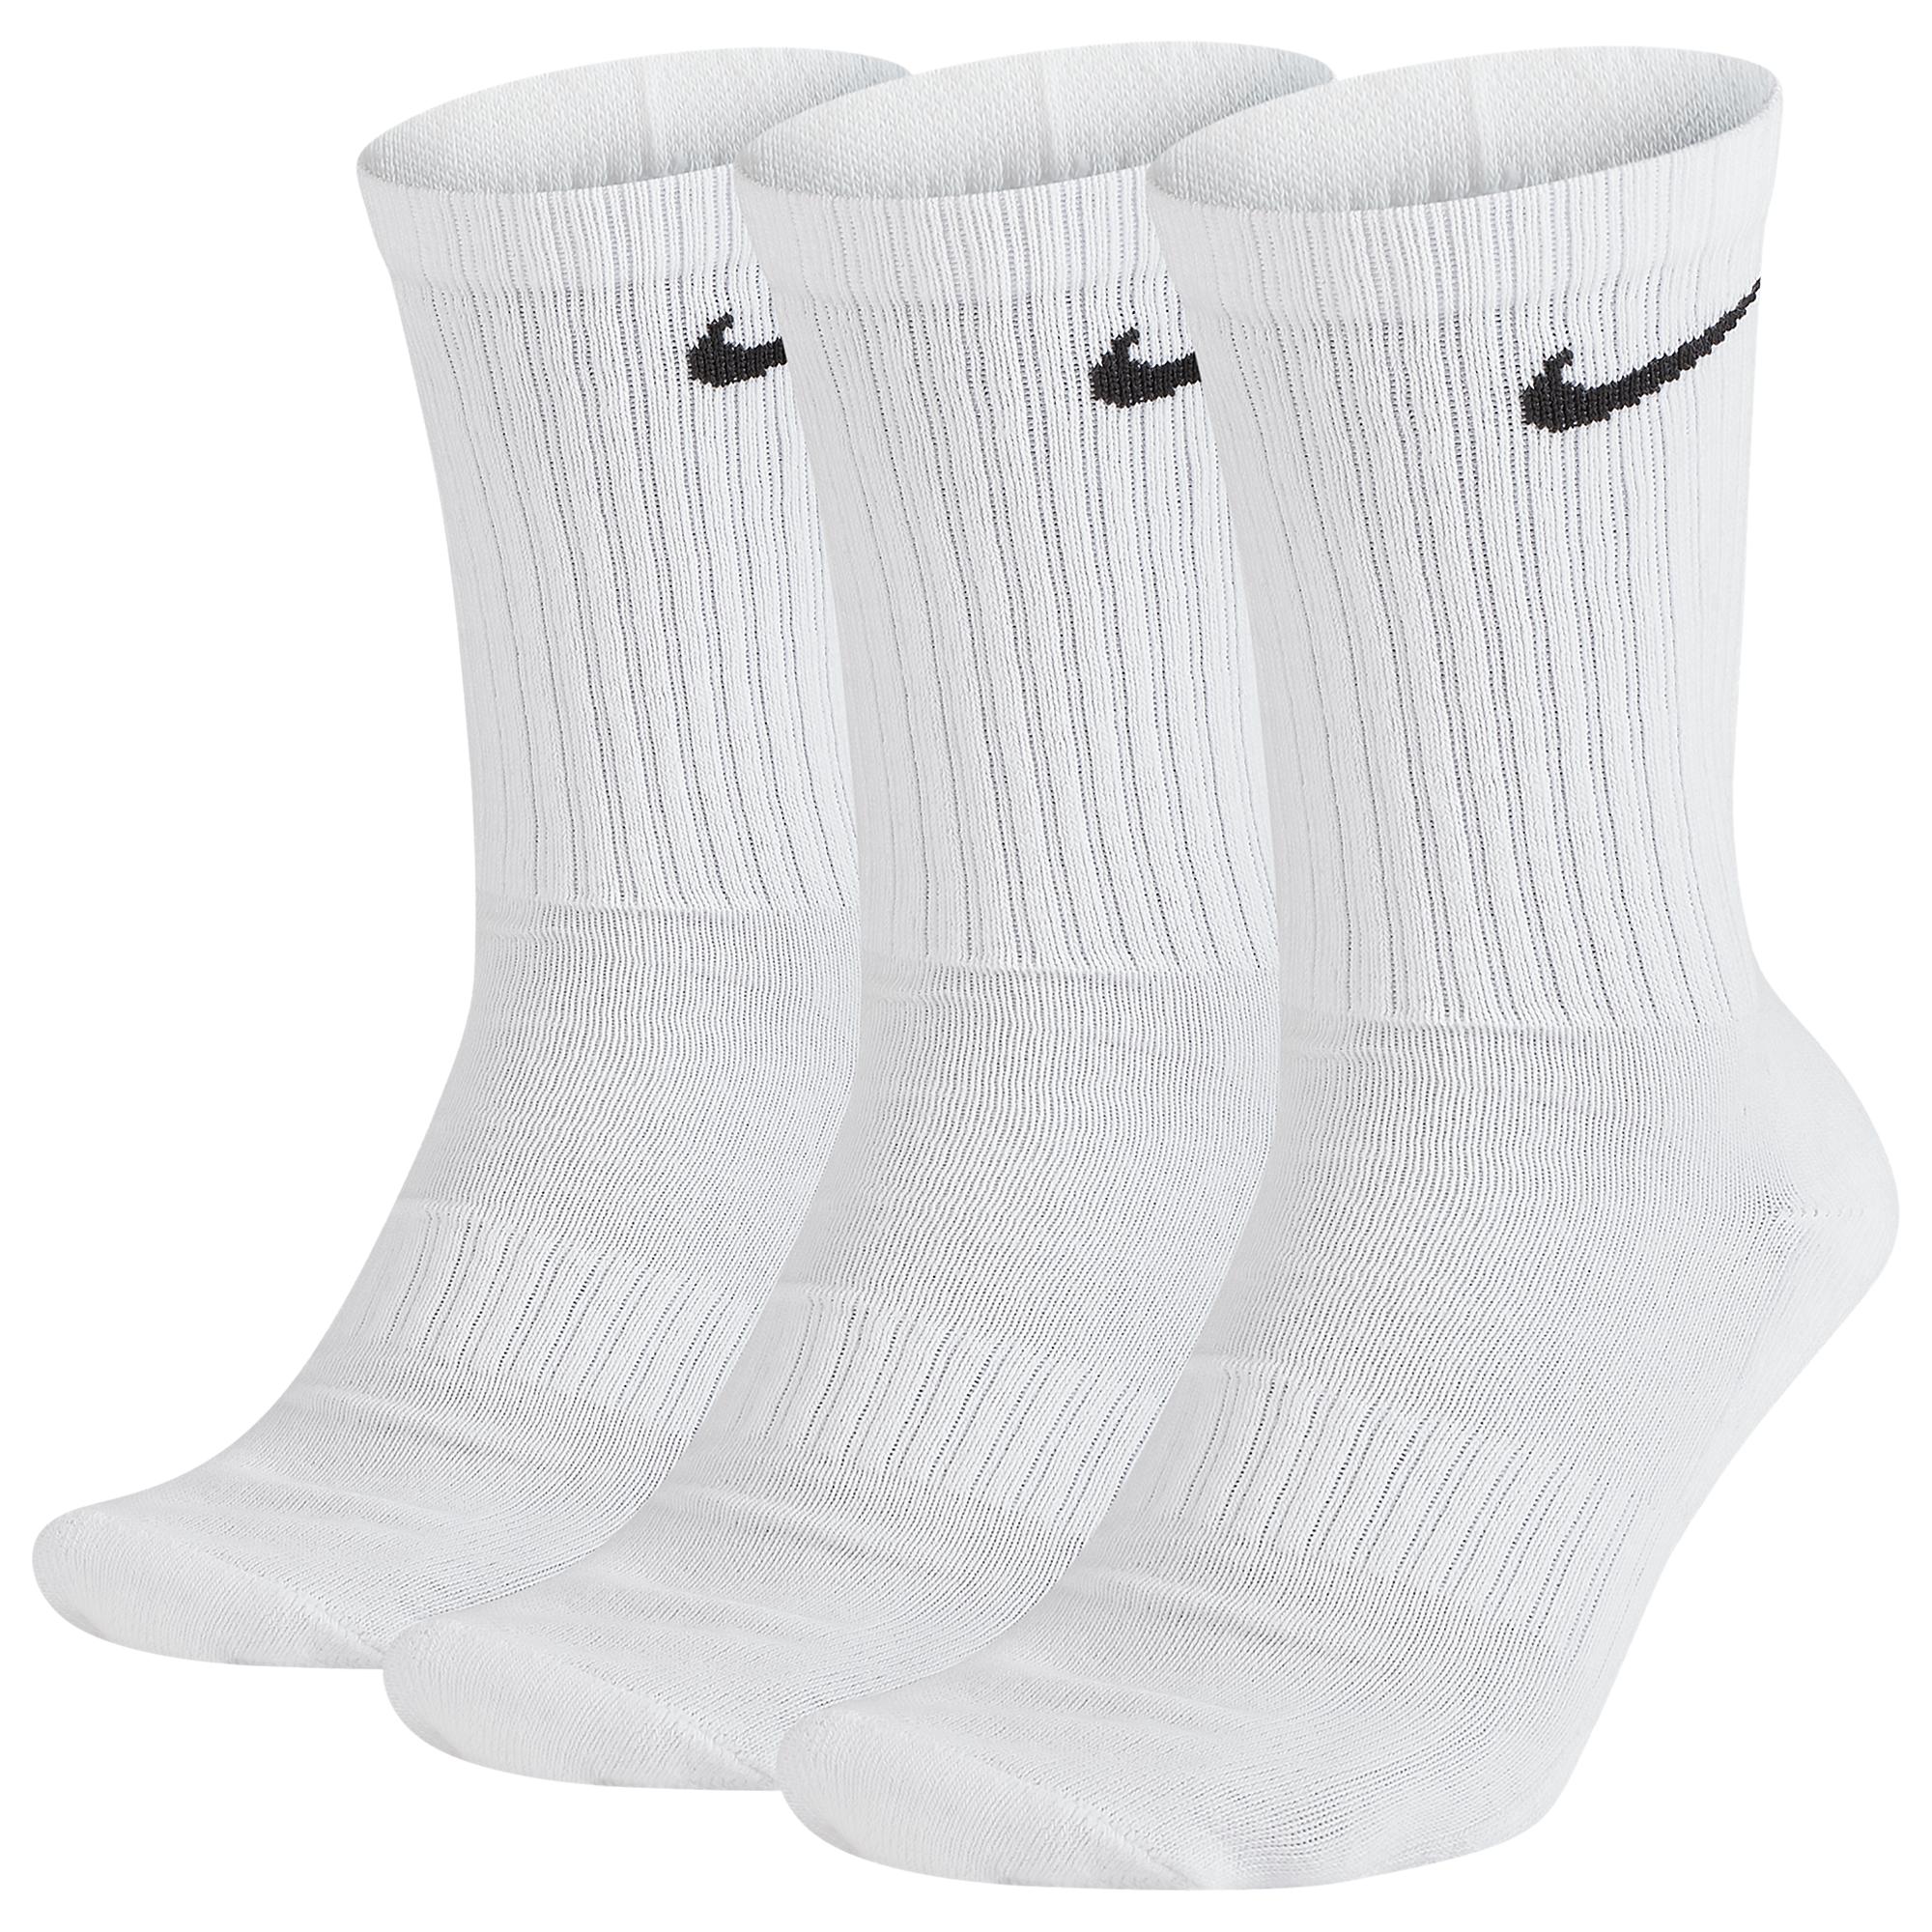 Nike 3 Pack Dri-fit Cotton Crew Socks in White for Men - Lyst